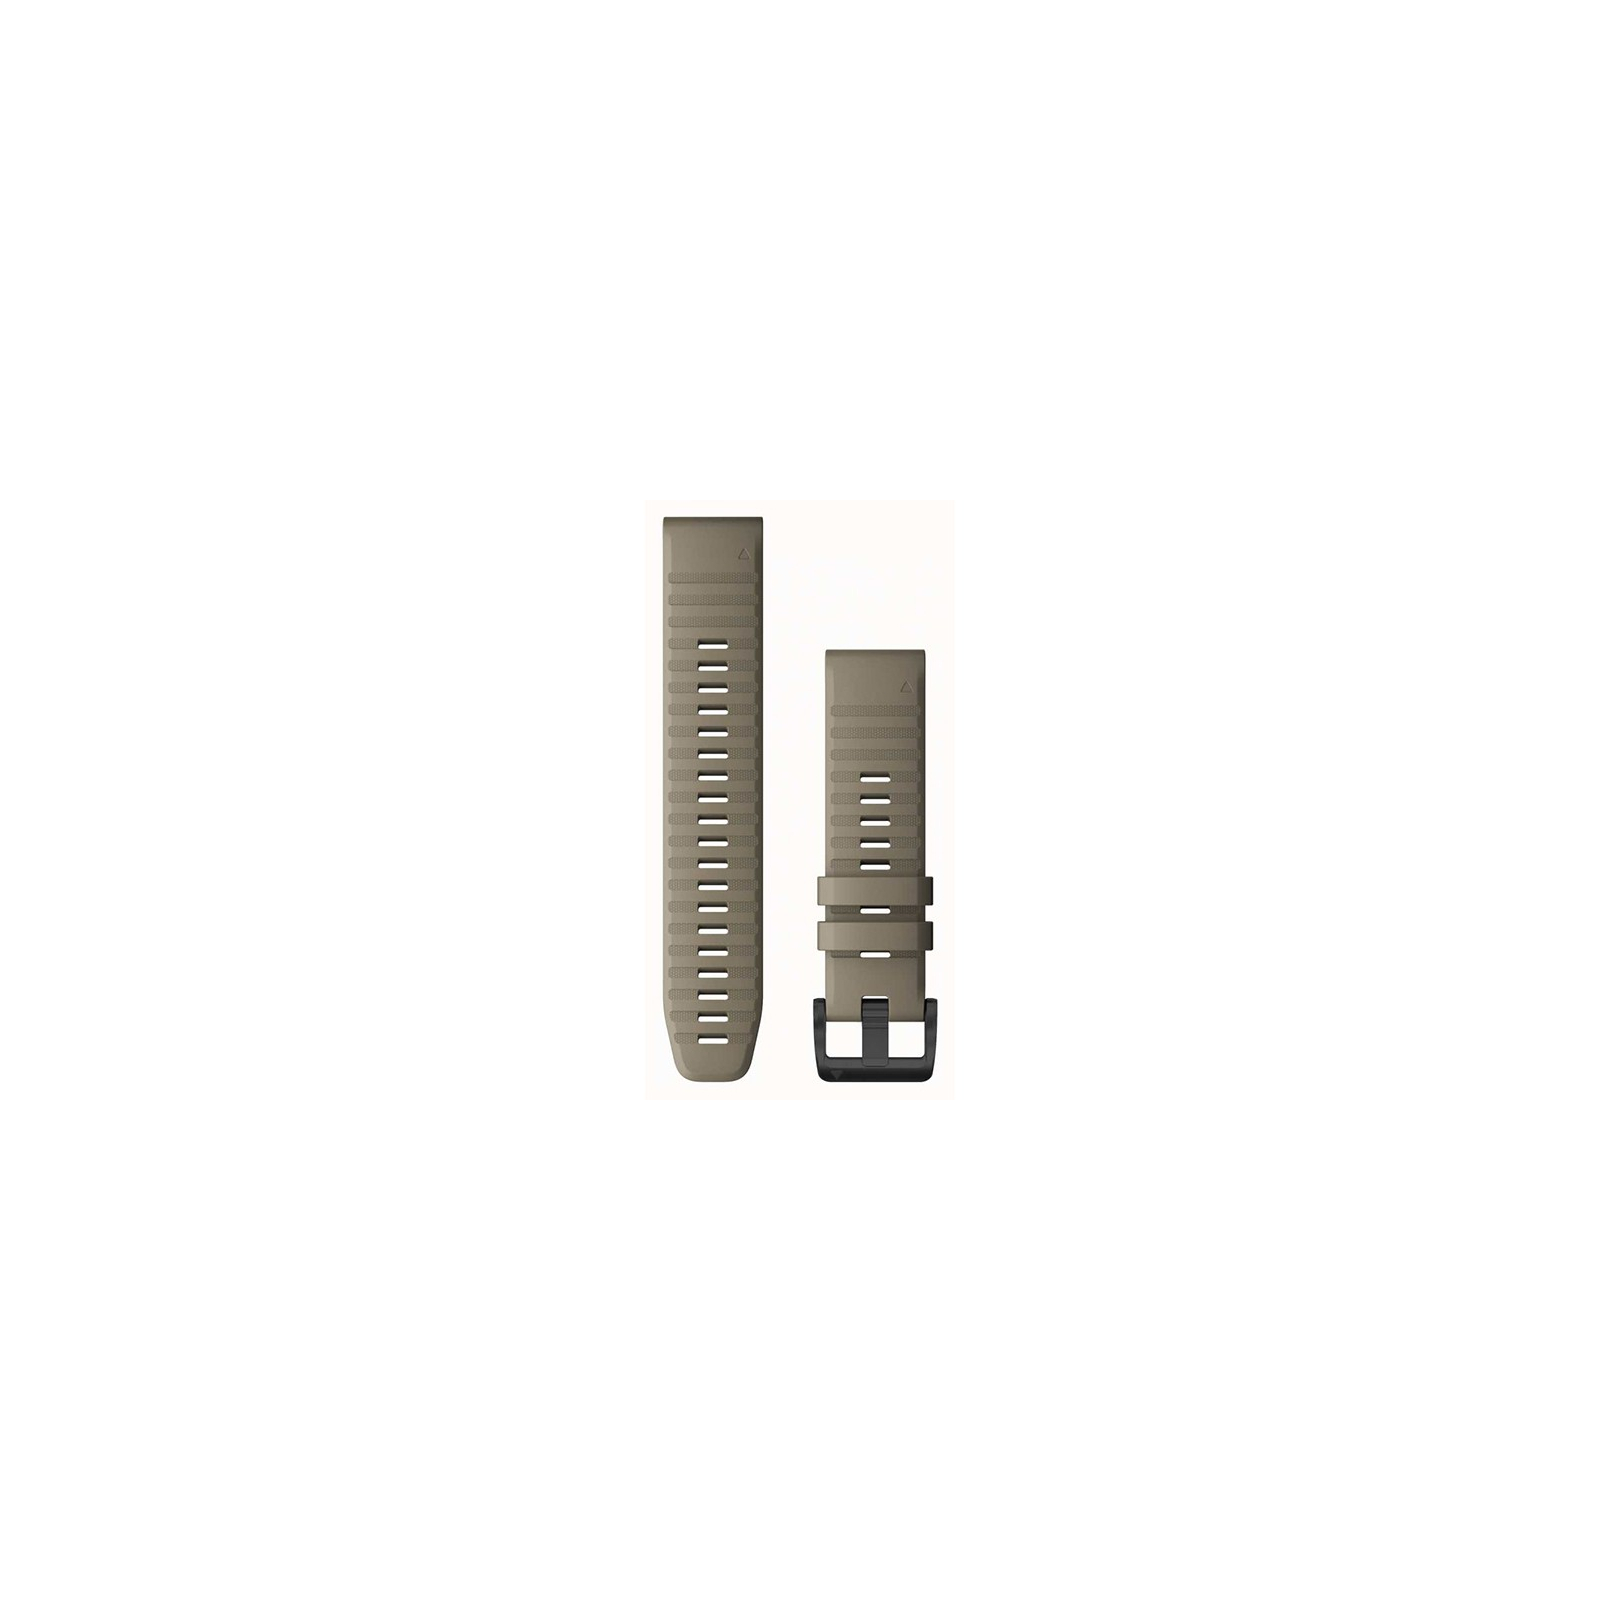 Ремешок для смарт-часов Garmin fenix 6 22mm QuickFit Dark Sandstone Silicone (010-12863-02)